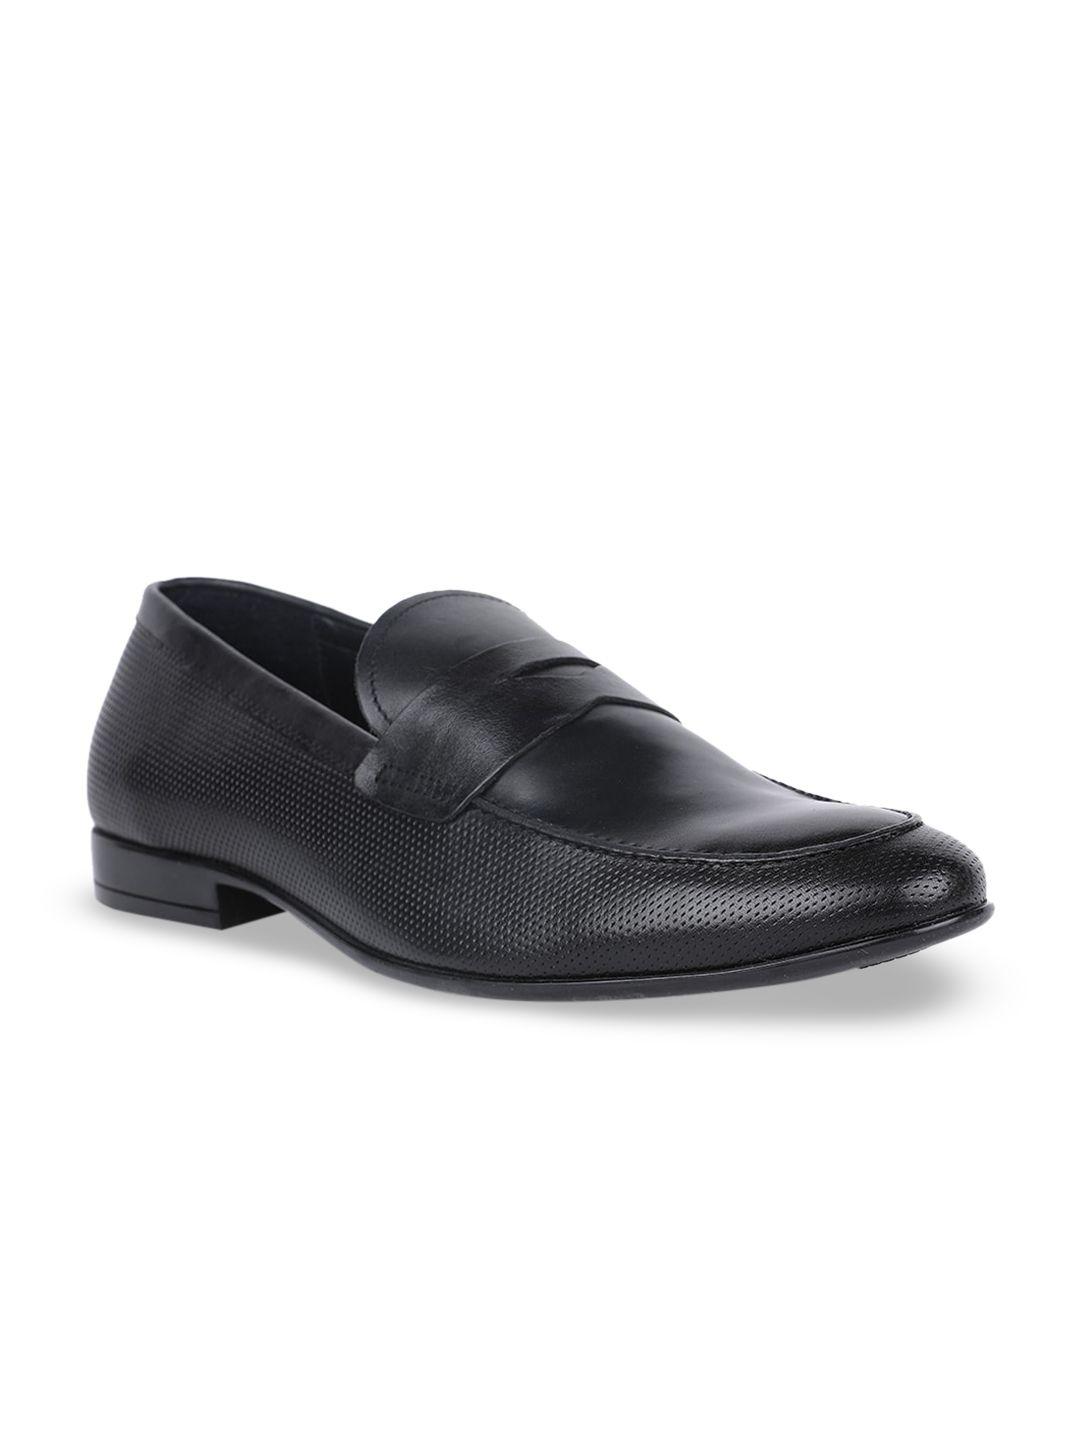 bata men black textured formal leather loafers